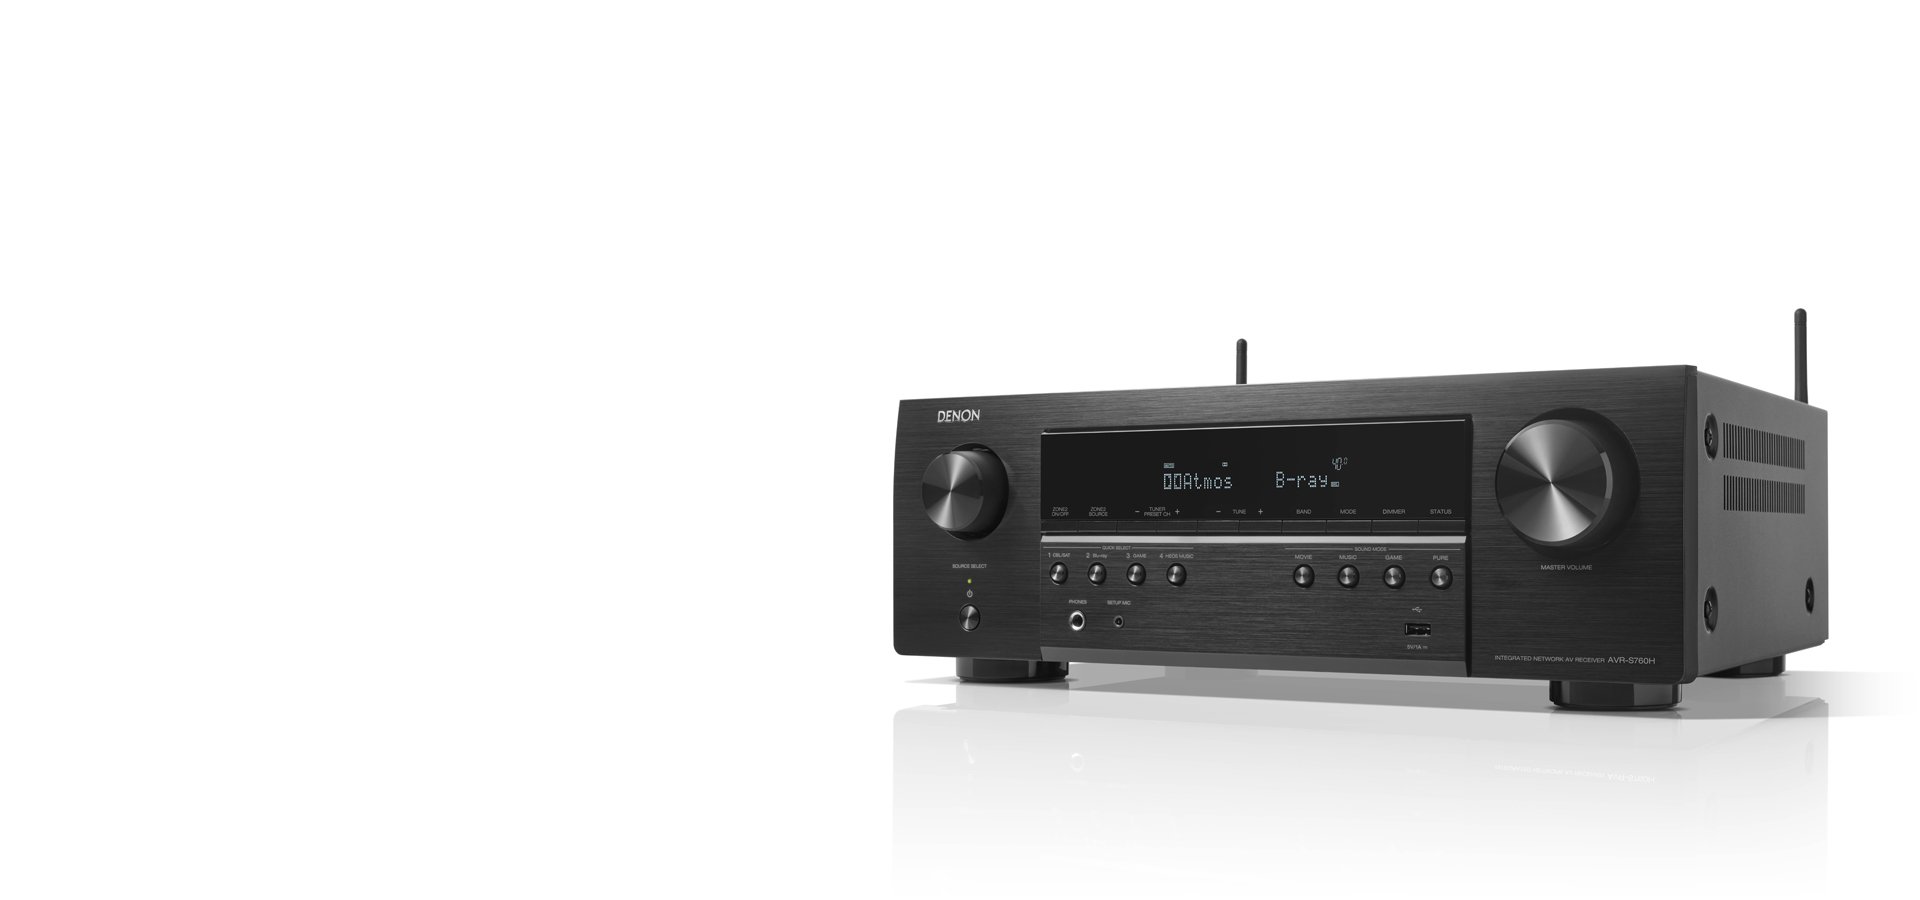 Denon AVR-S760H 7.2ch 4K AV Receiver with Voice Control Compatibility